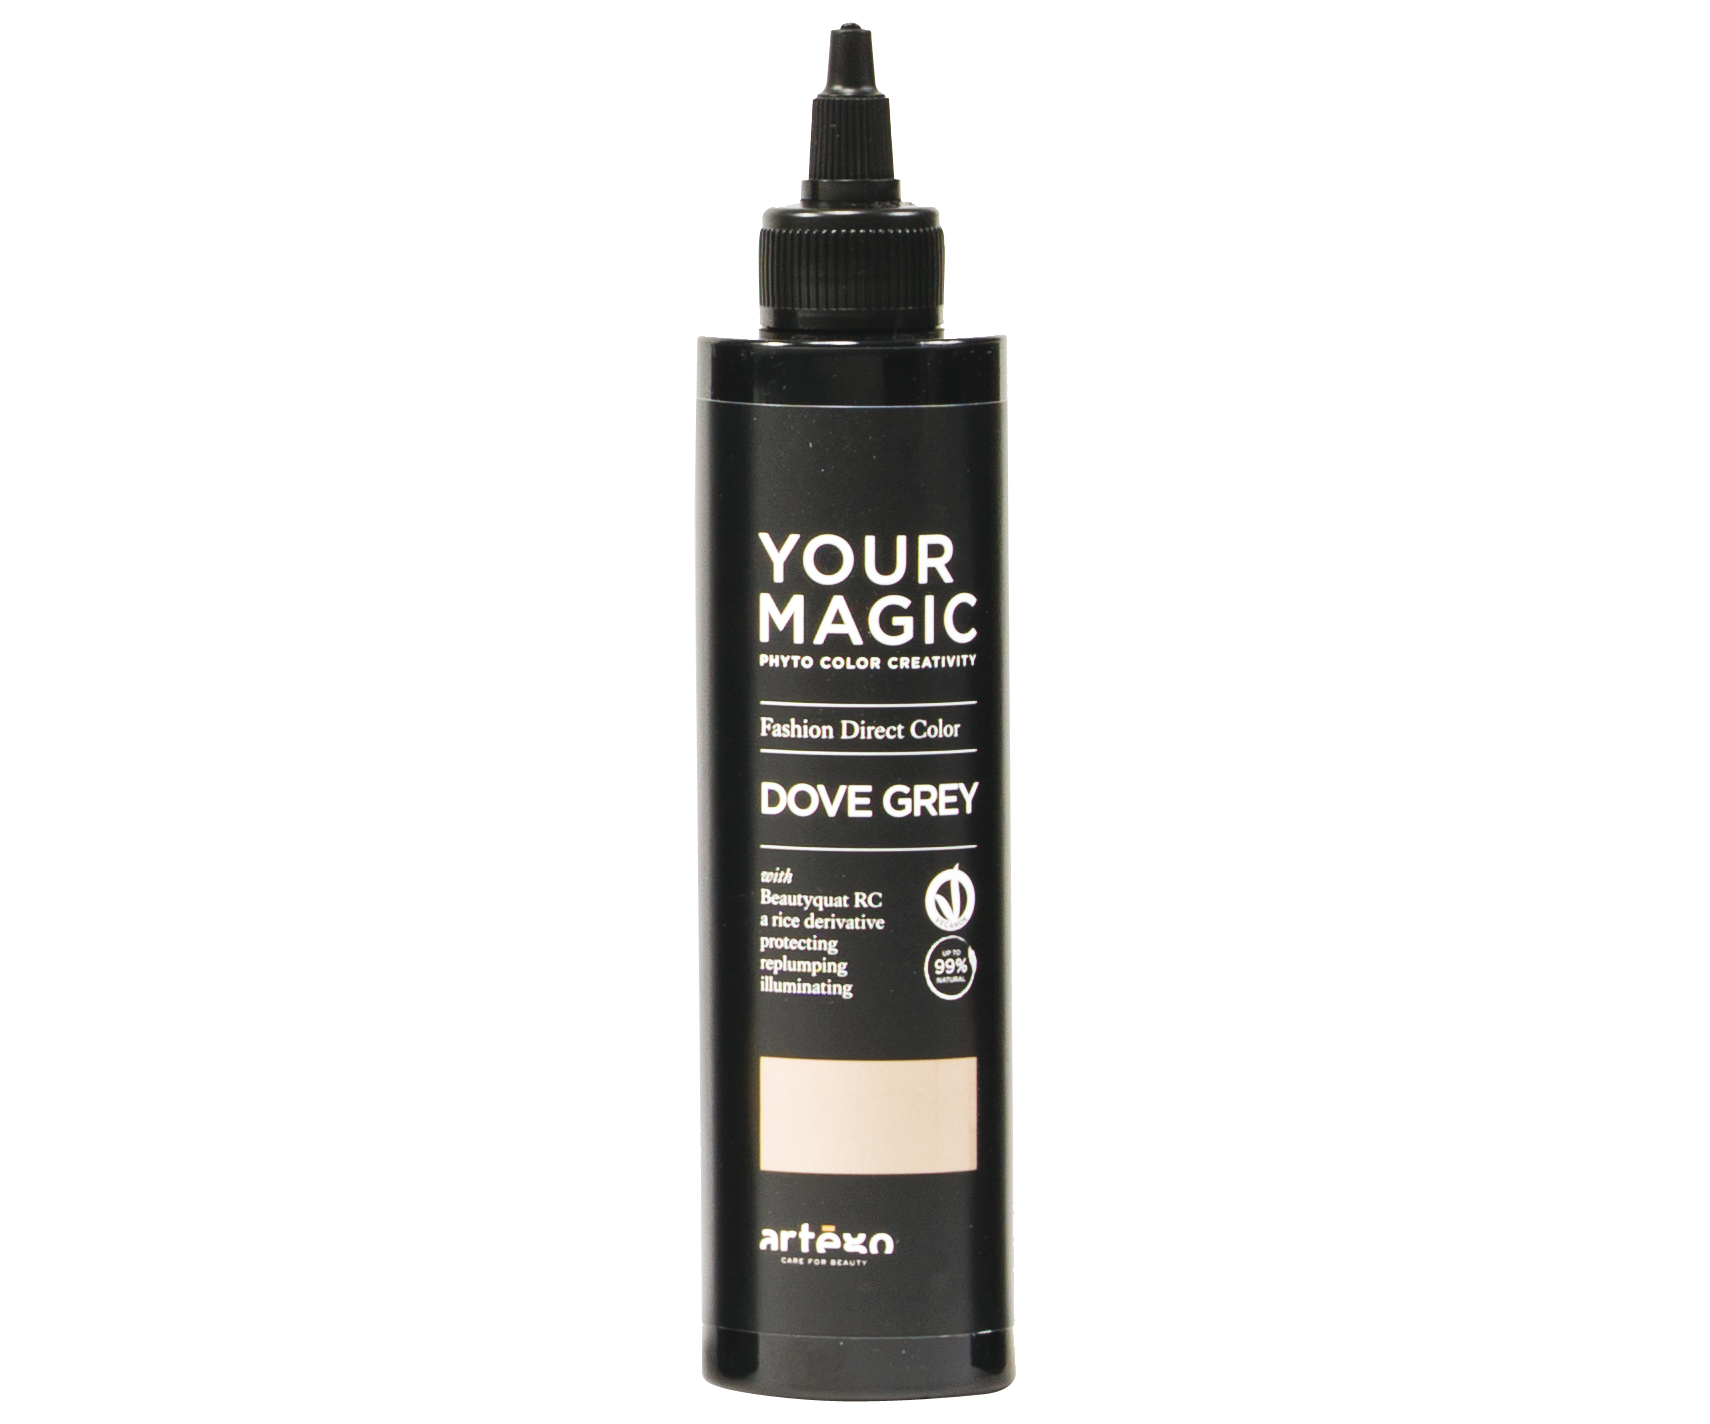 Tónující pigmenty na vlasy Artégo Your Magic Fashion Direct Color - 200 ml, Dove Grey (0165262) + DÁREK ZDARMA